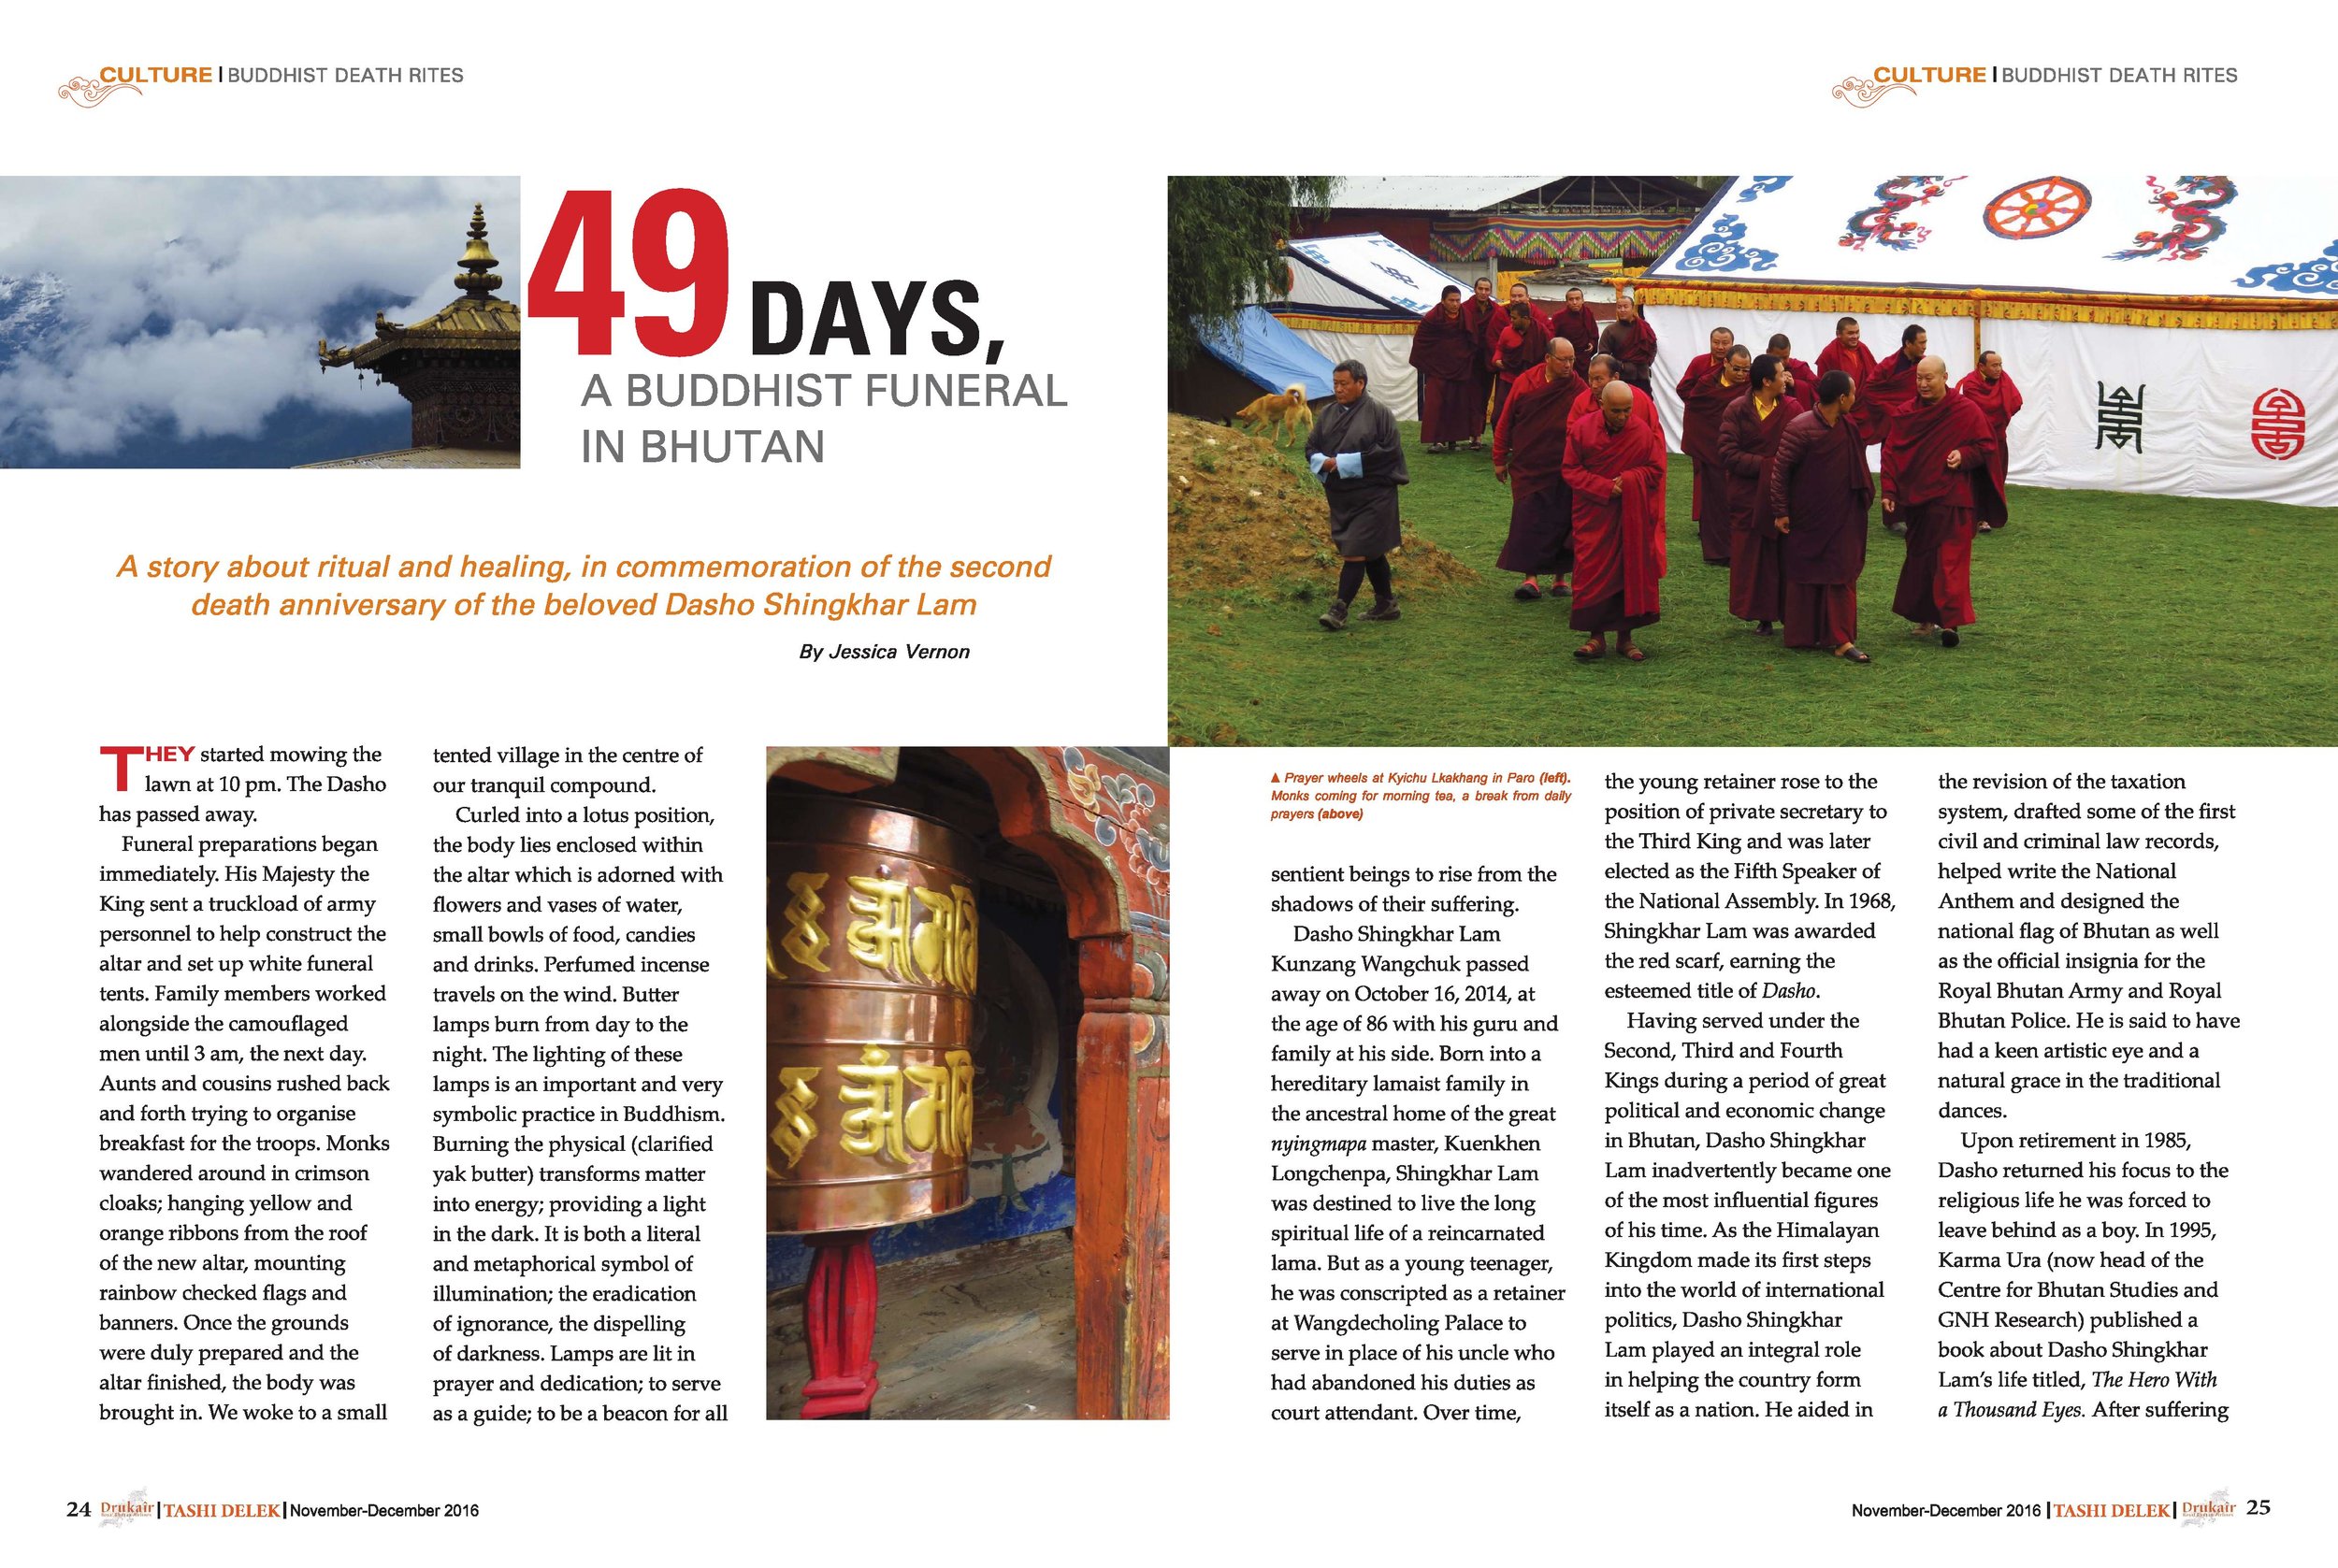 Dec. 2016: 49 Days, a Buddhist Funeral in Bhutan